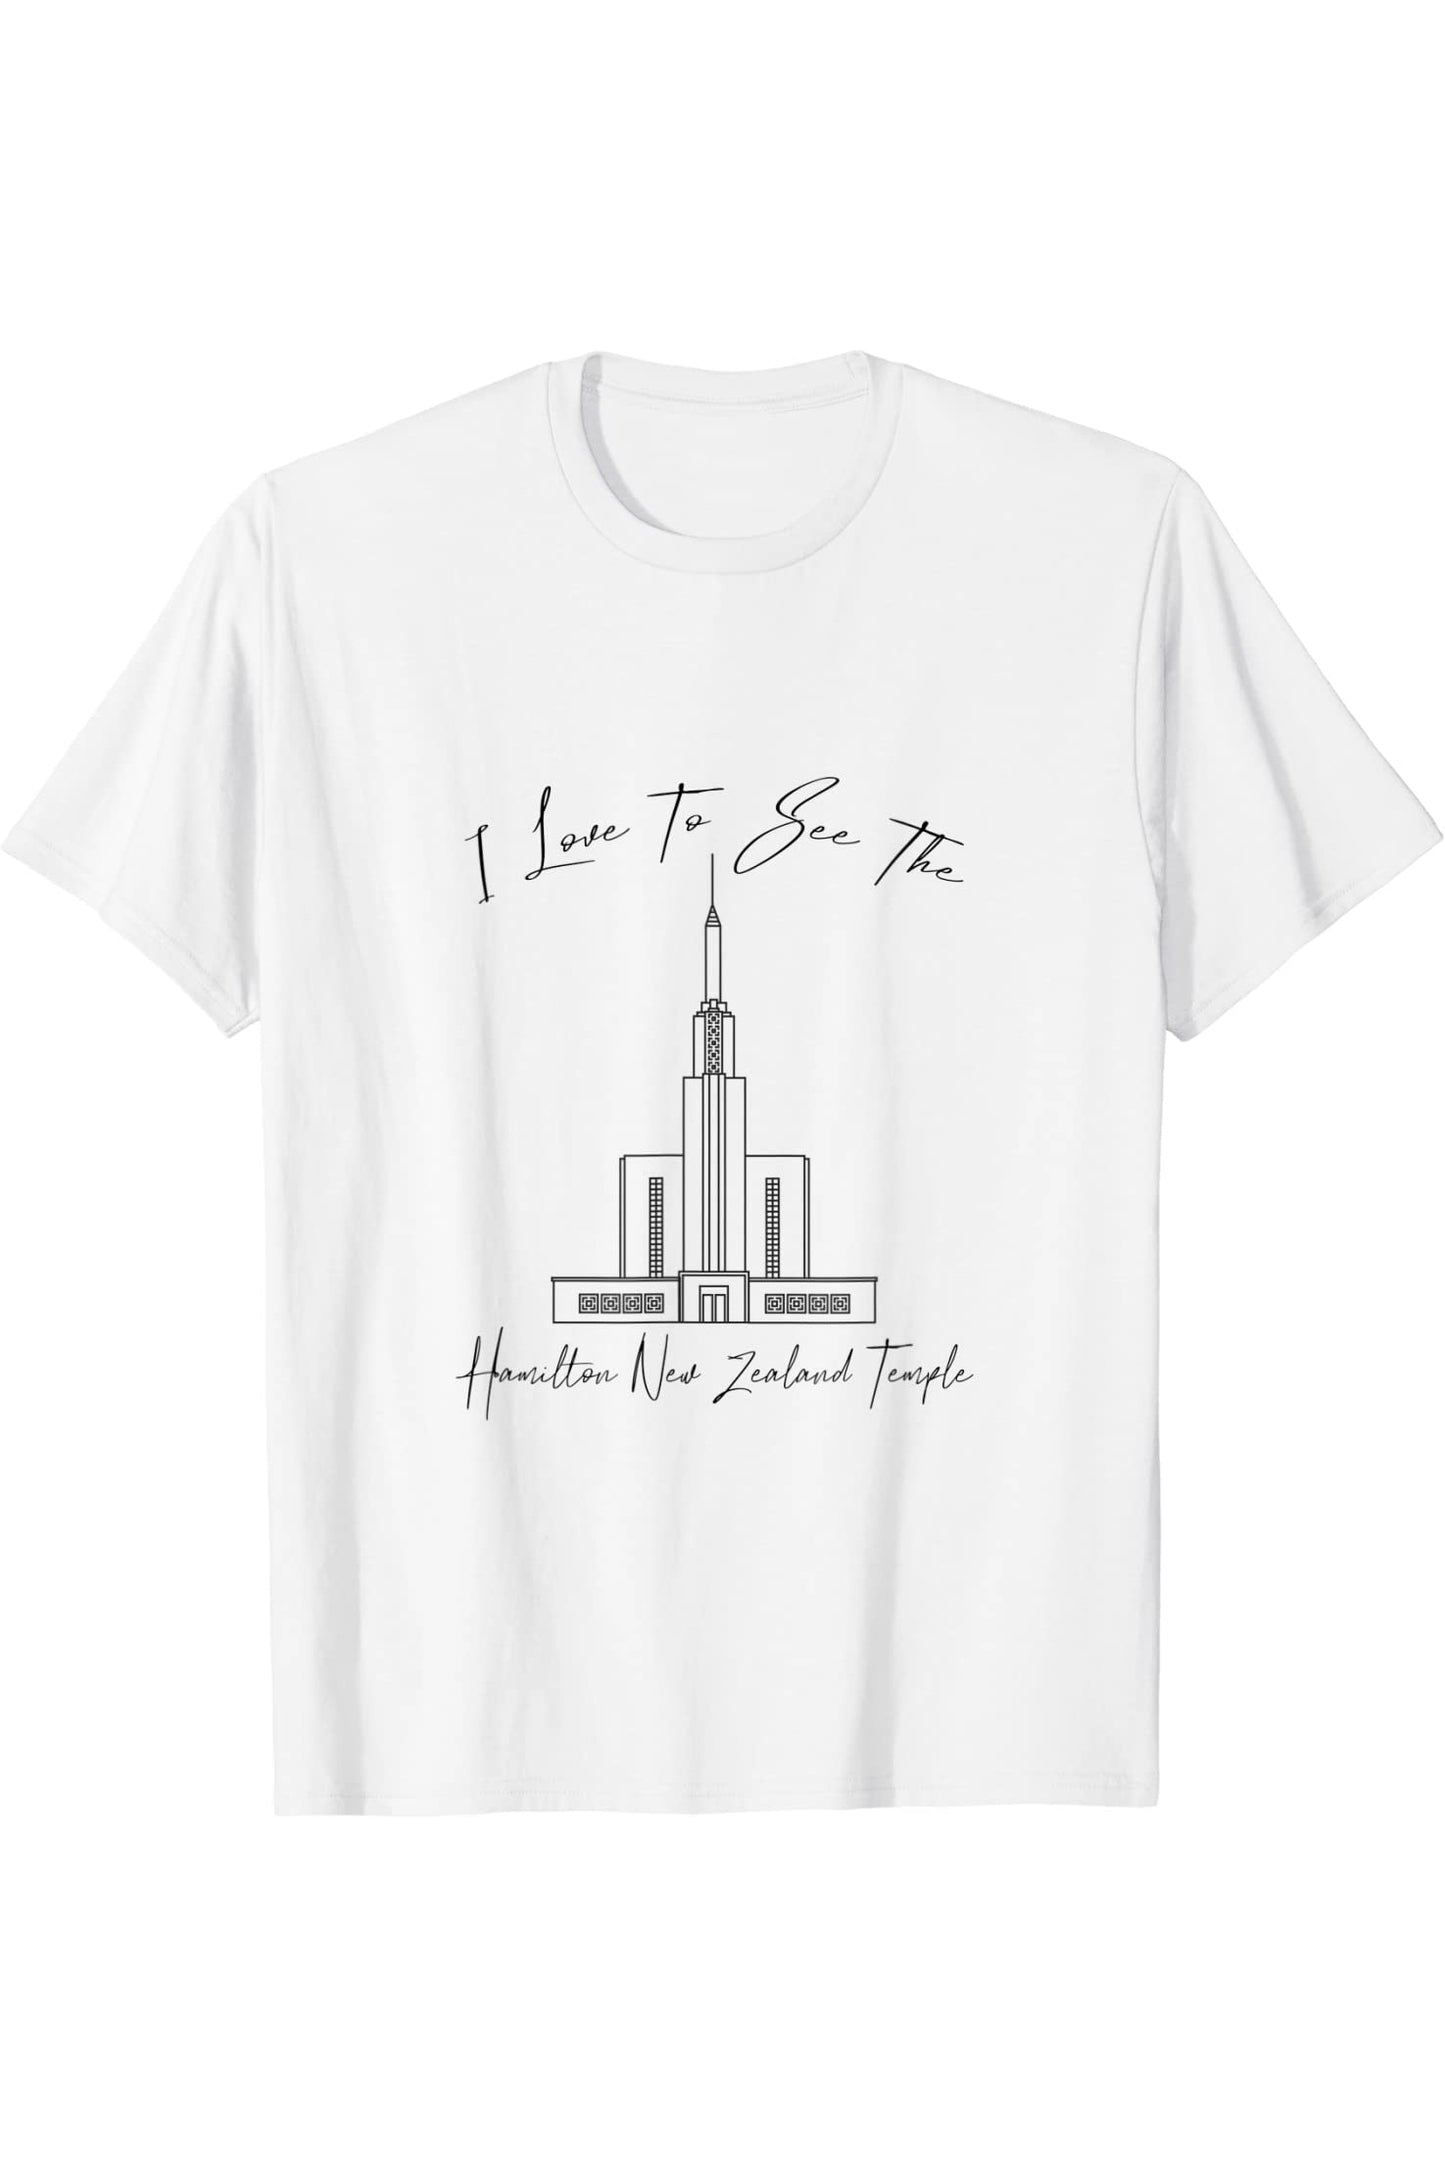 Hamilton New Zealand Temple T-Shirt - Calligraphy Style (English) US